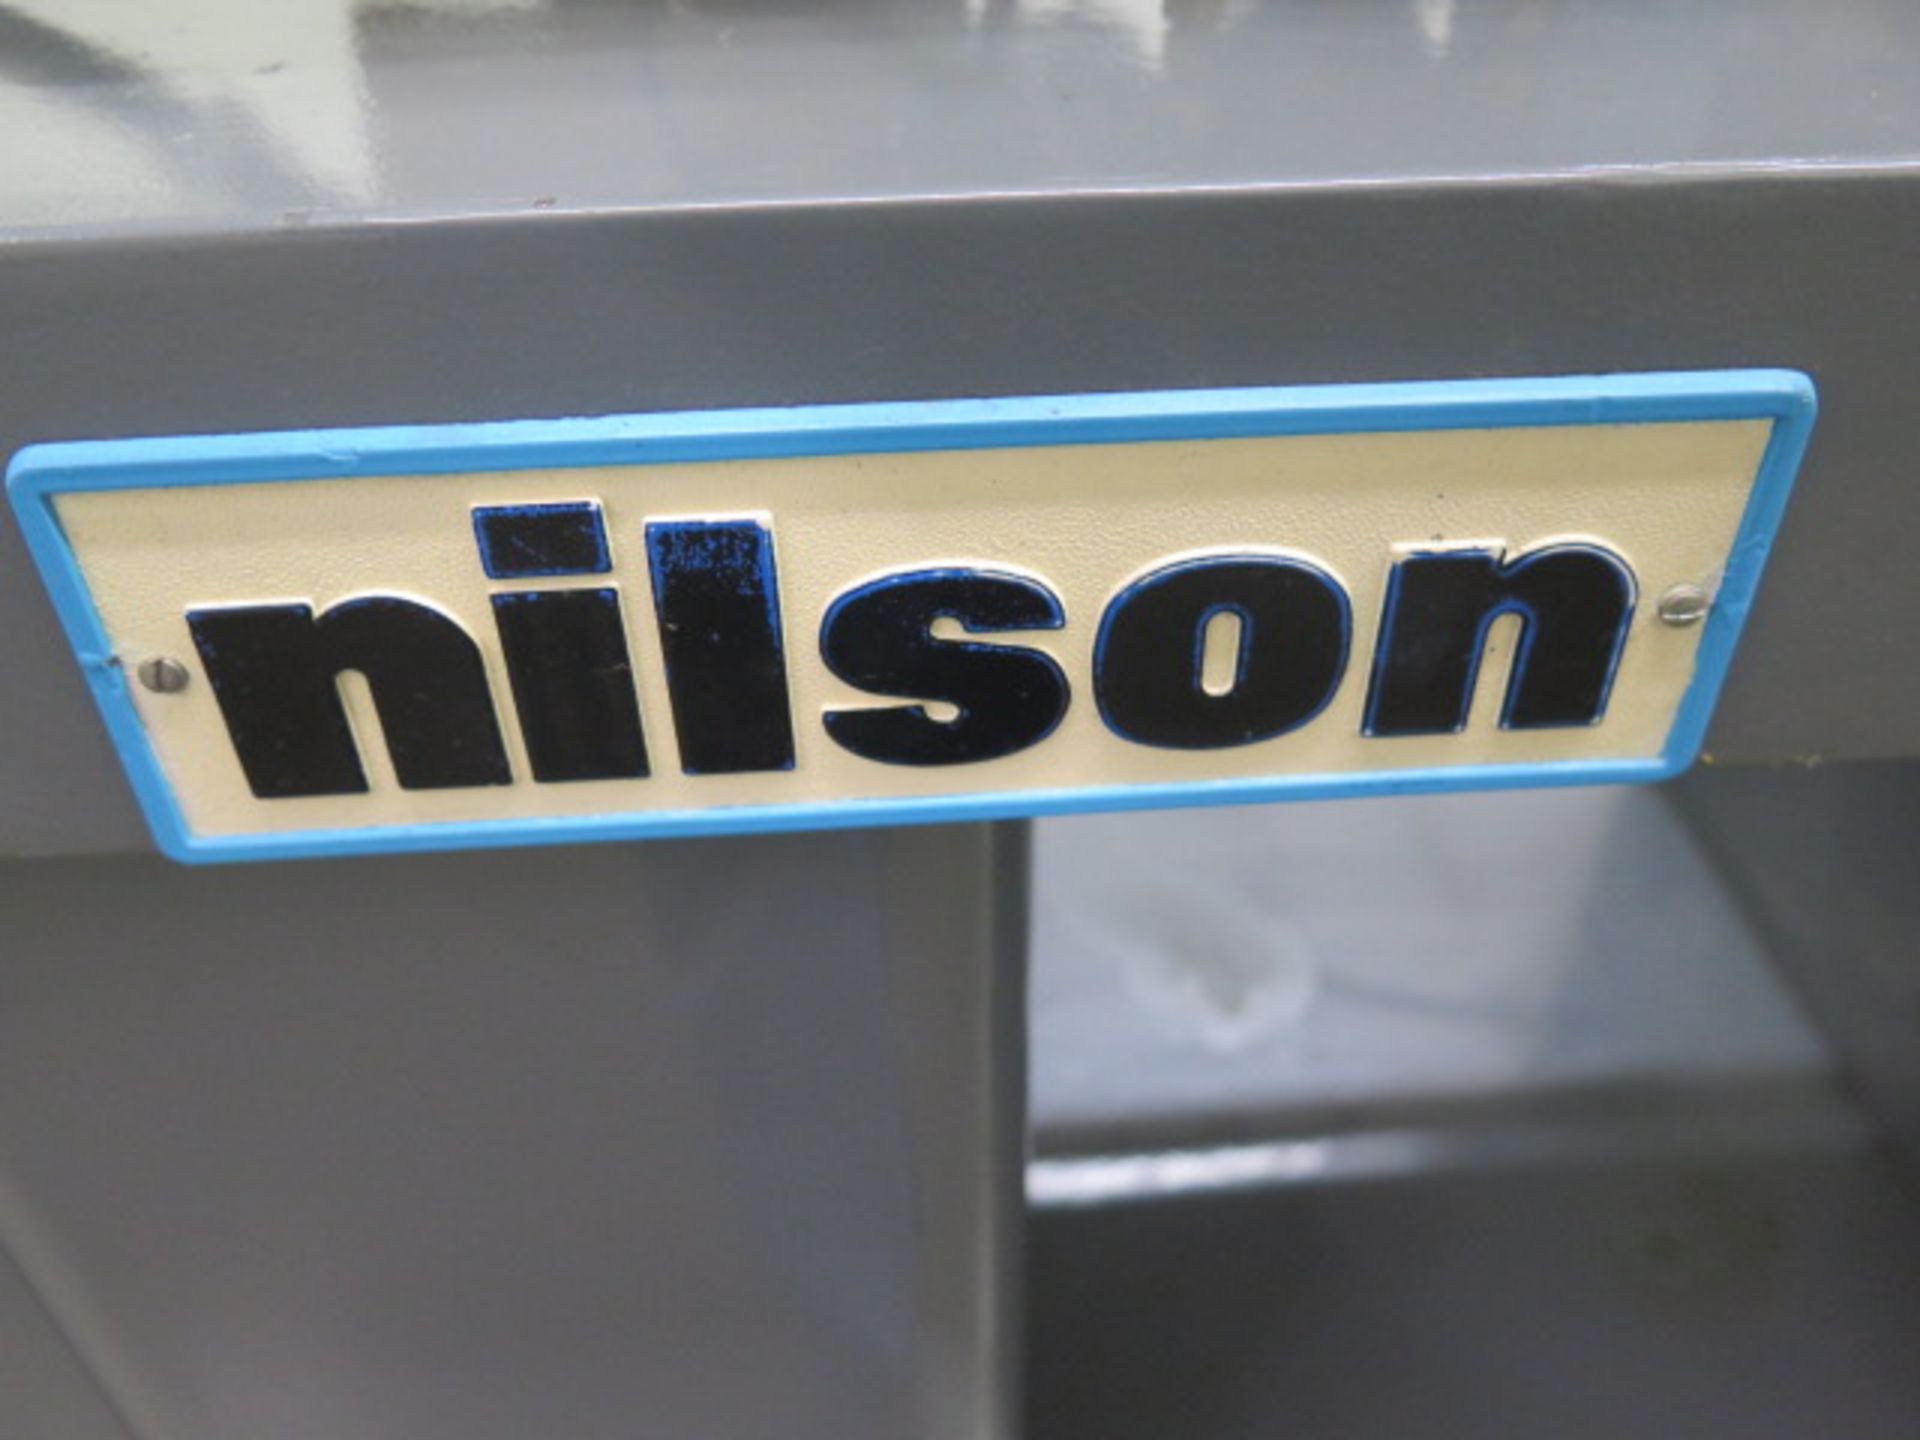 Nilson mdl. 700/L 1/32" Cap 4-Slide Machine s/n 110955 w/ Cutoff Head, 1-Ton Press Head, Misc Access - Image 15 of 27